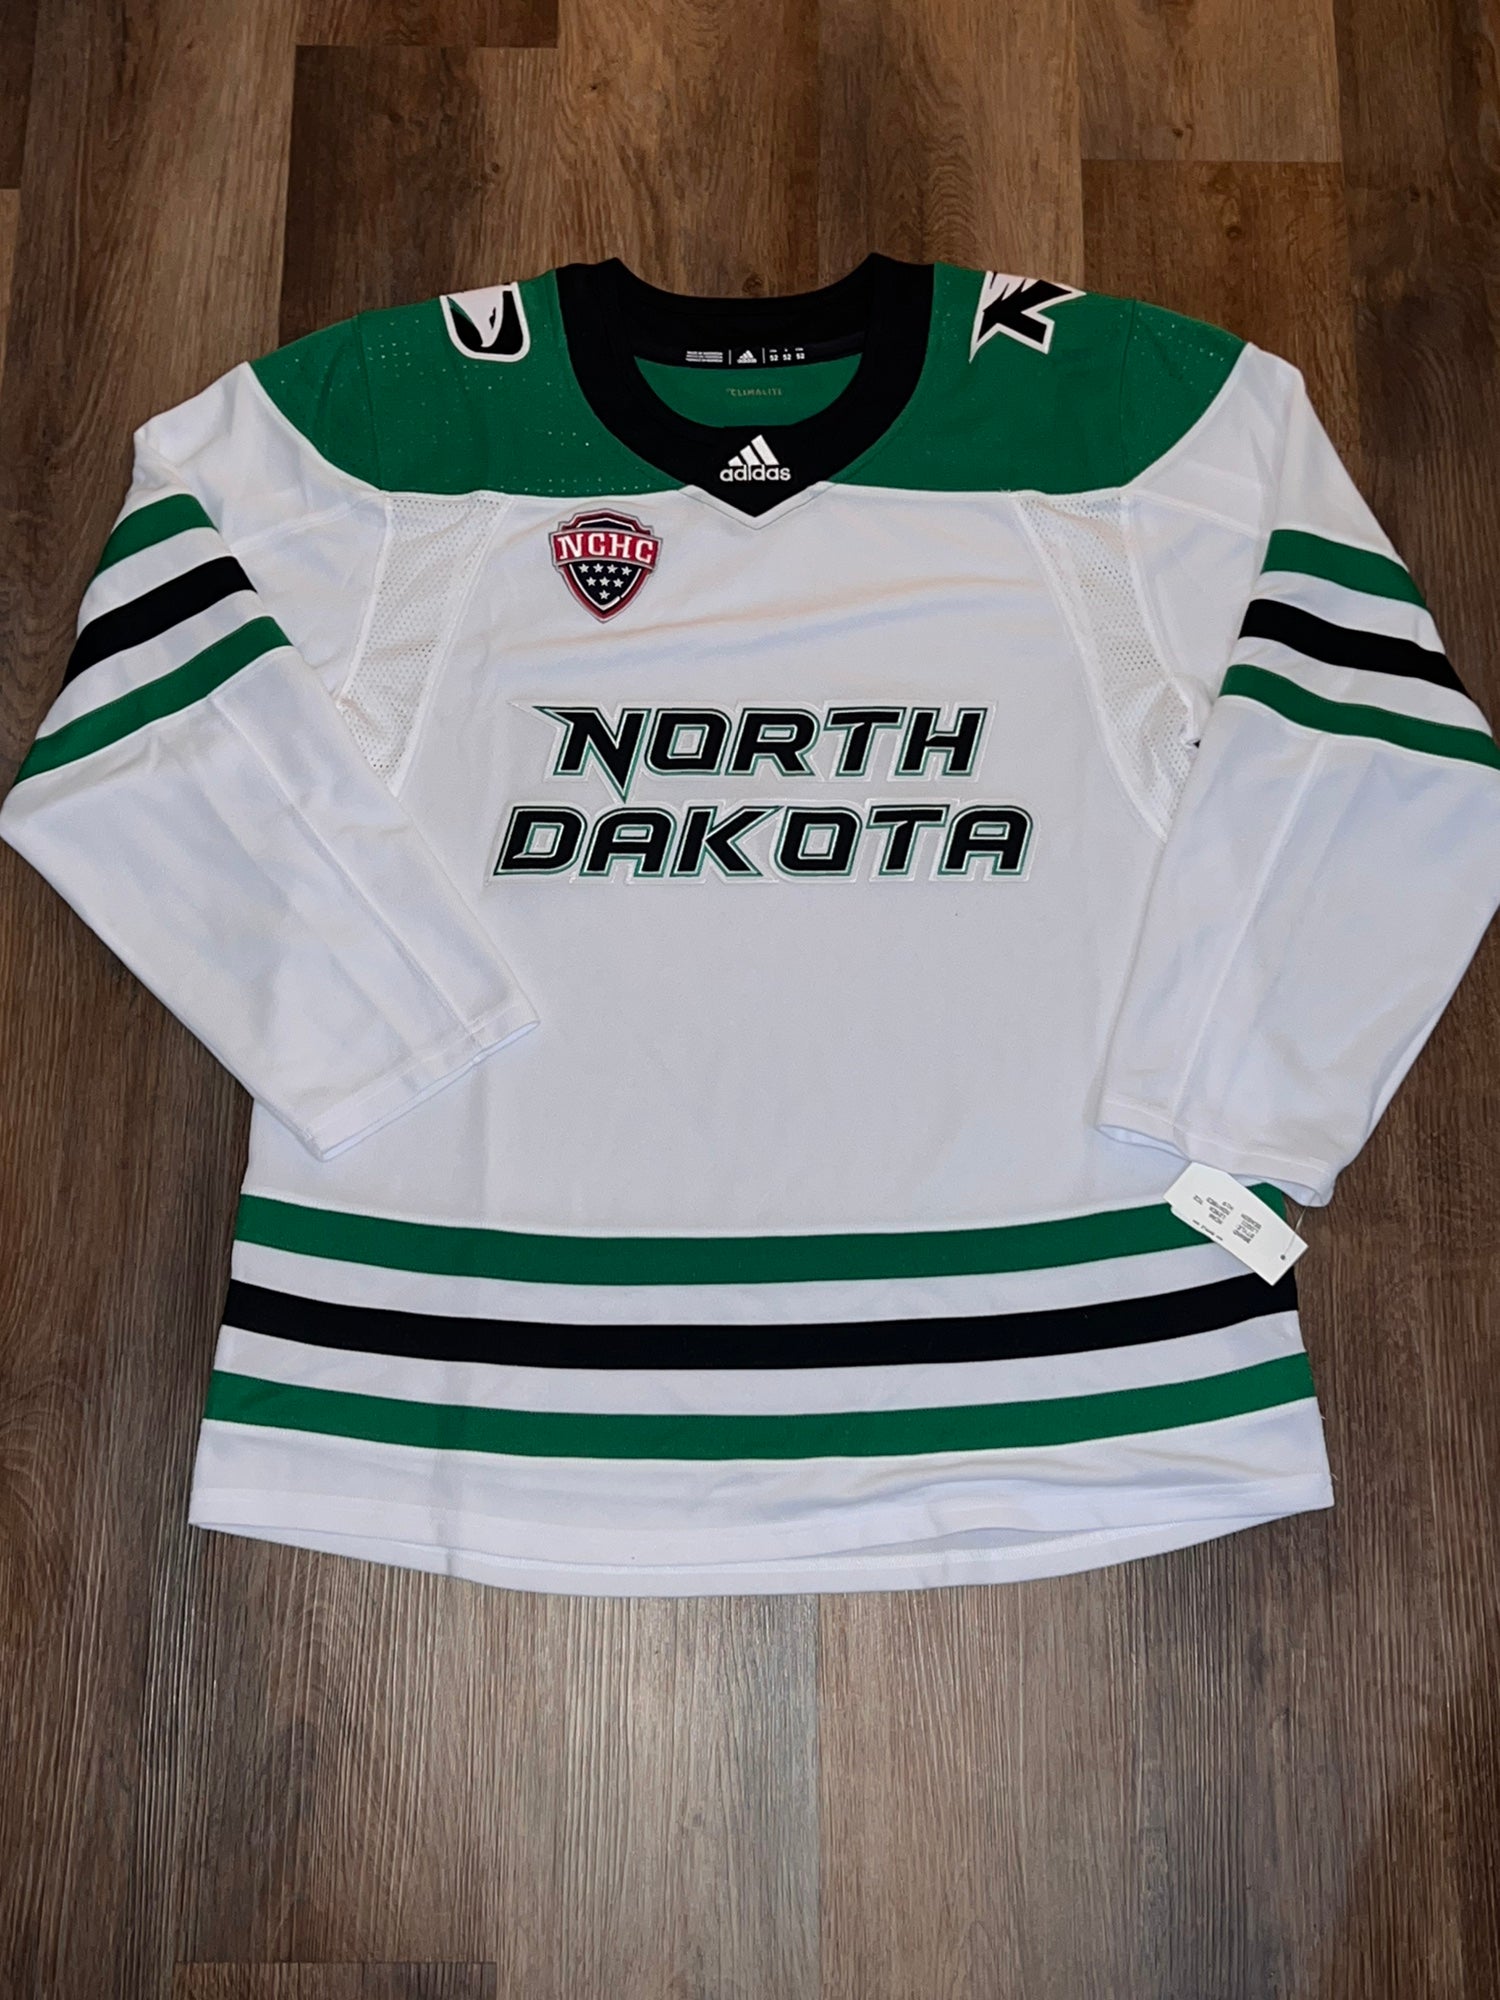 North Dakota Hockey Jersey